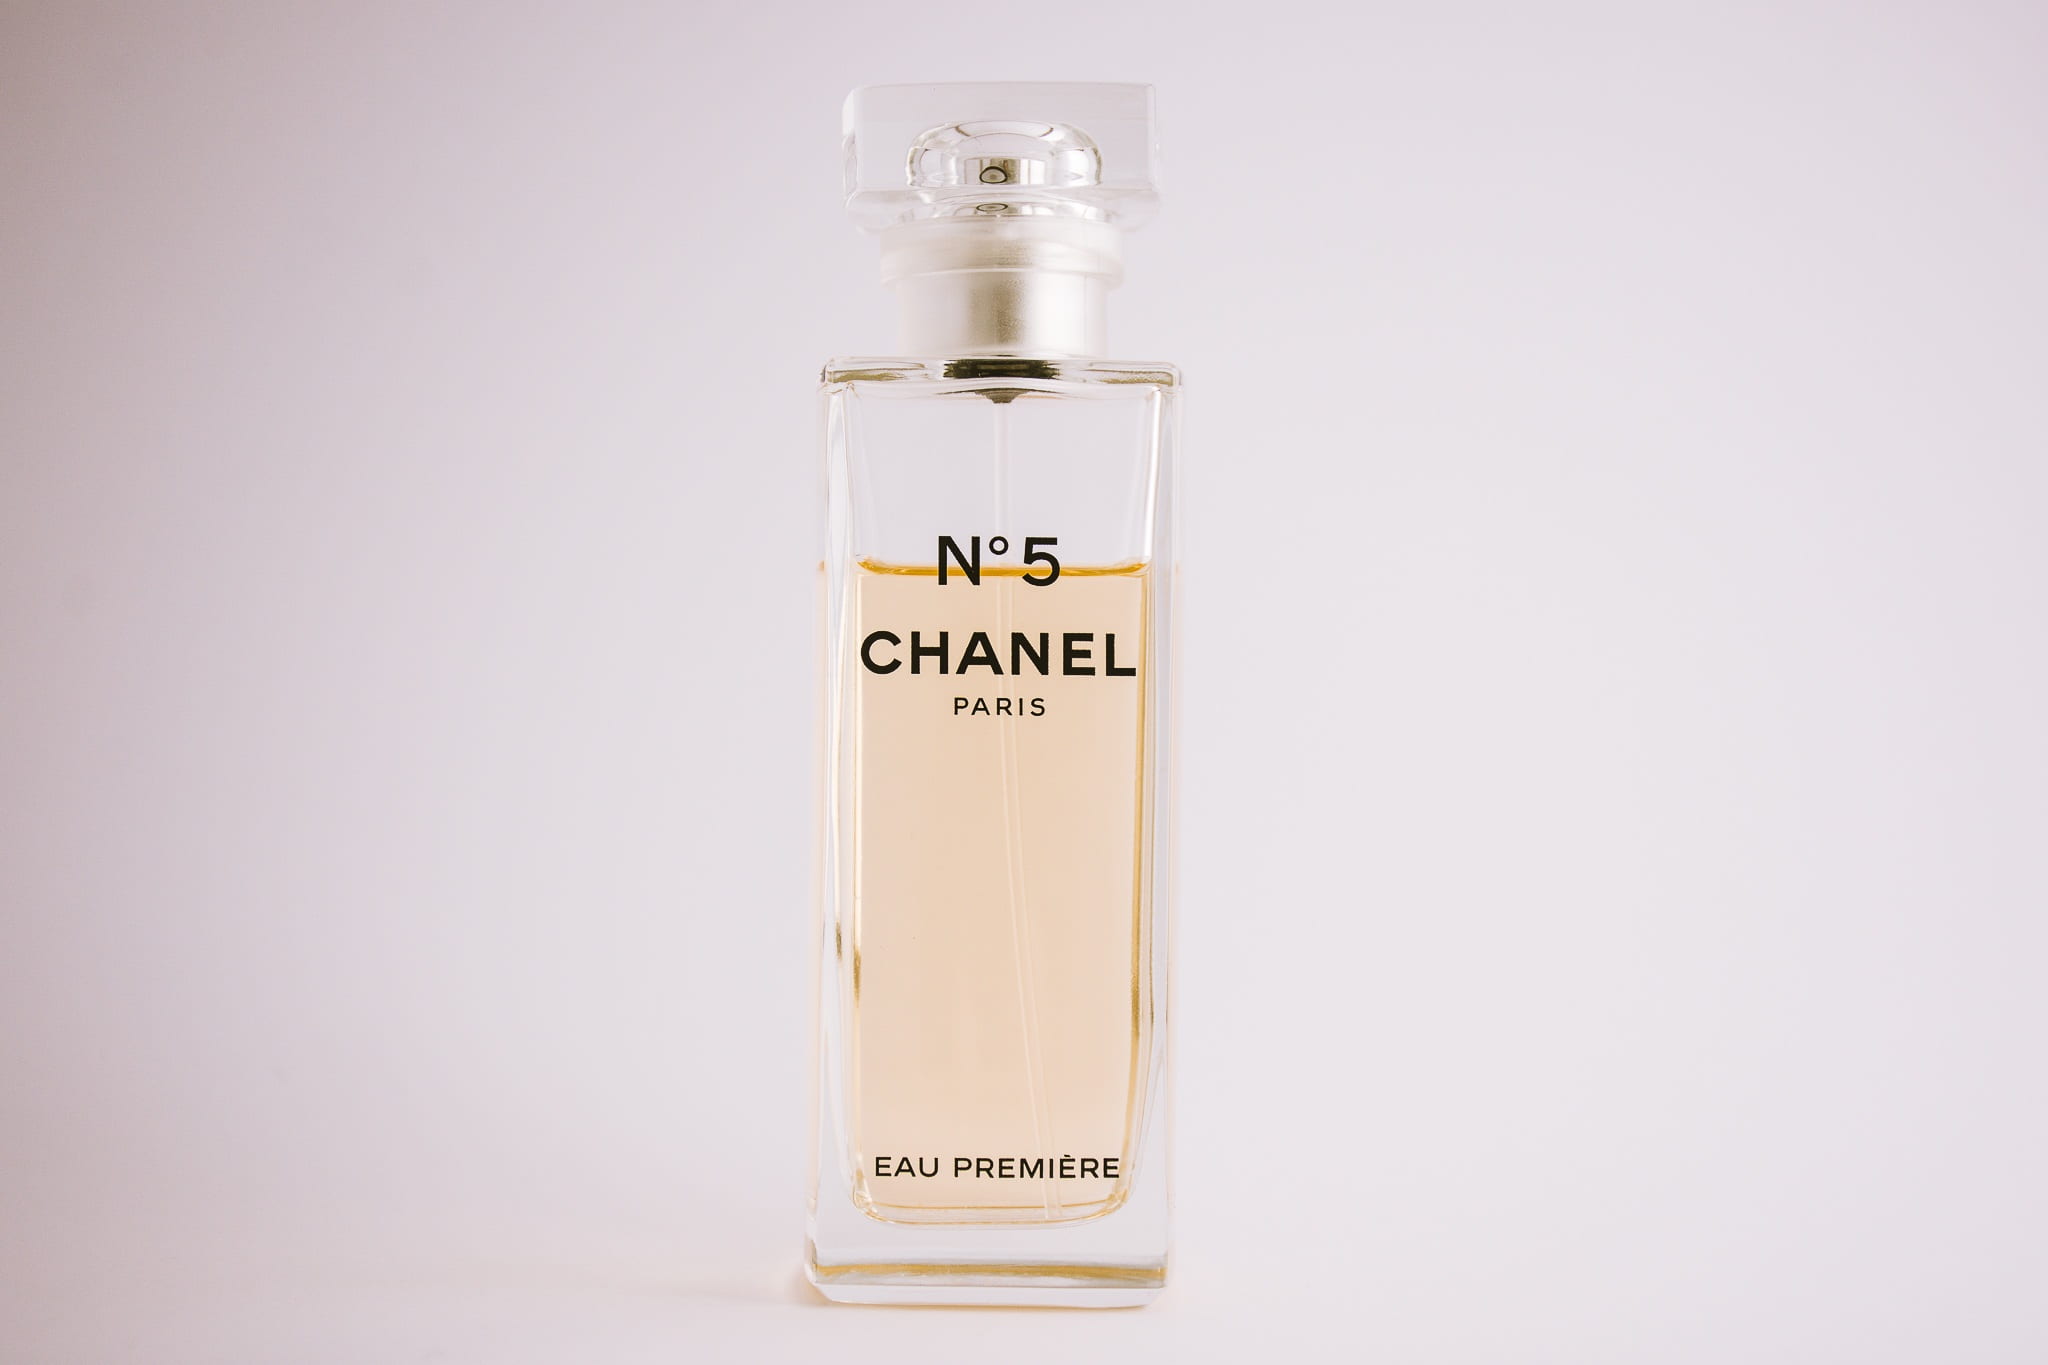 Chanel Paris N5 perfume bottle, glass, spray, luxury, fragrance